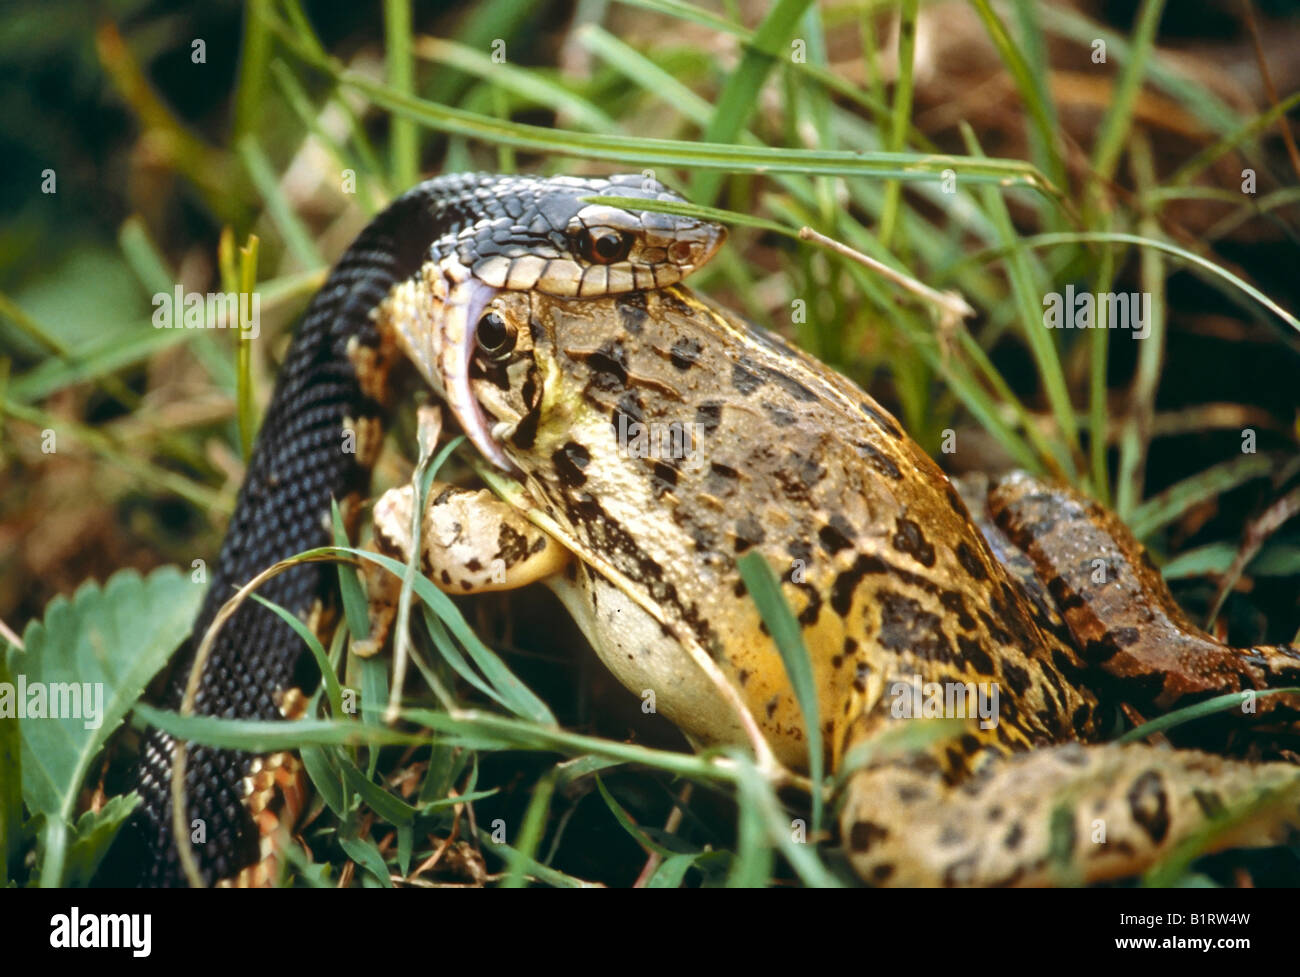 Snake (Serpentes) eating a American Bullfrog (Rana catesbeiana; Syn. Lithobates catesbeianus), Florida, USA Stock Photo